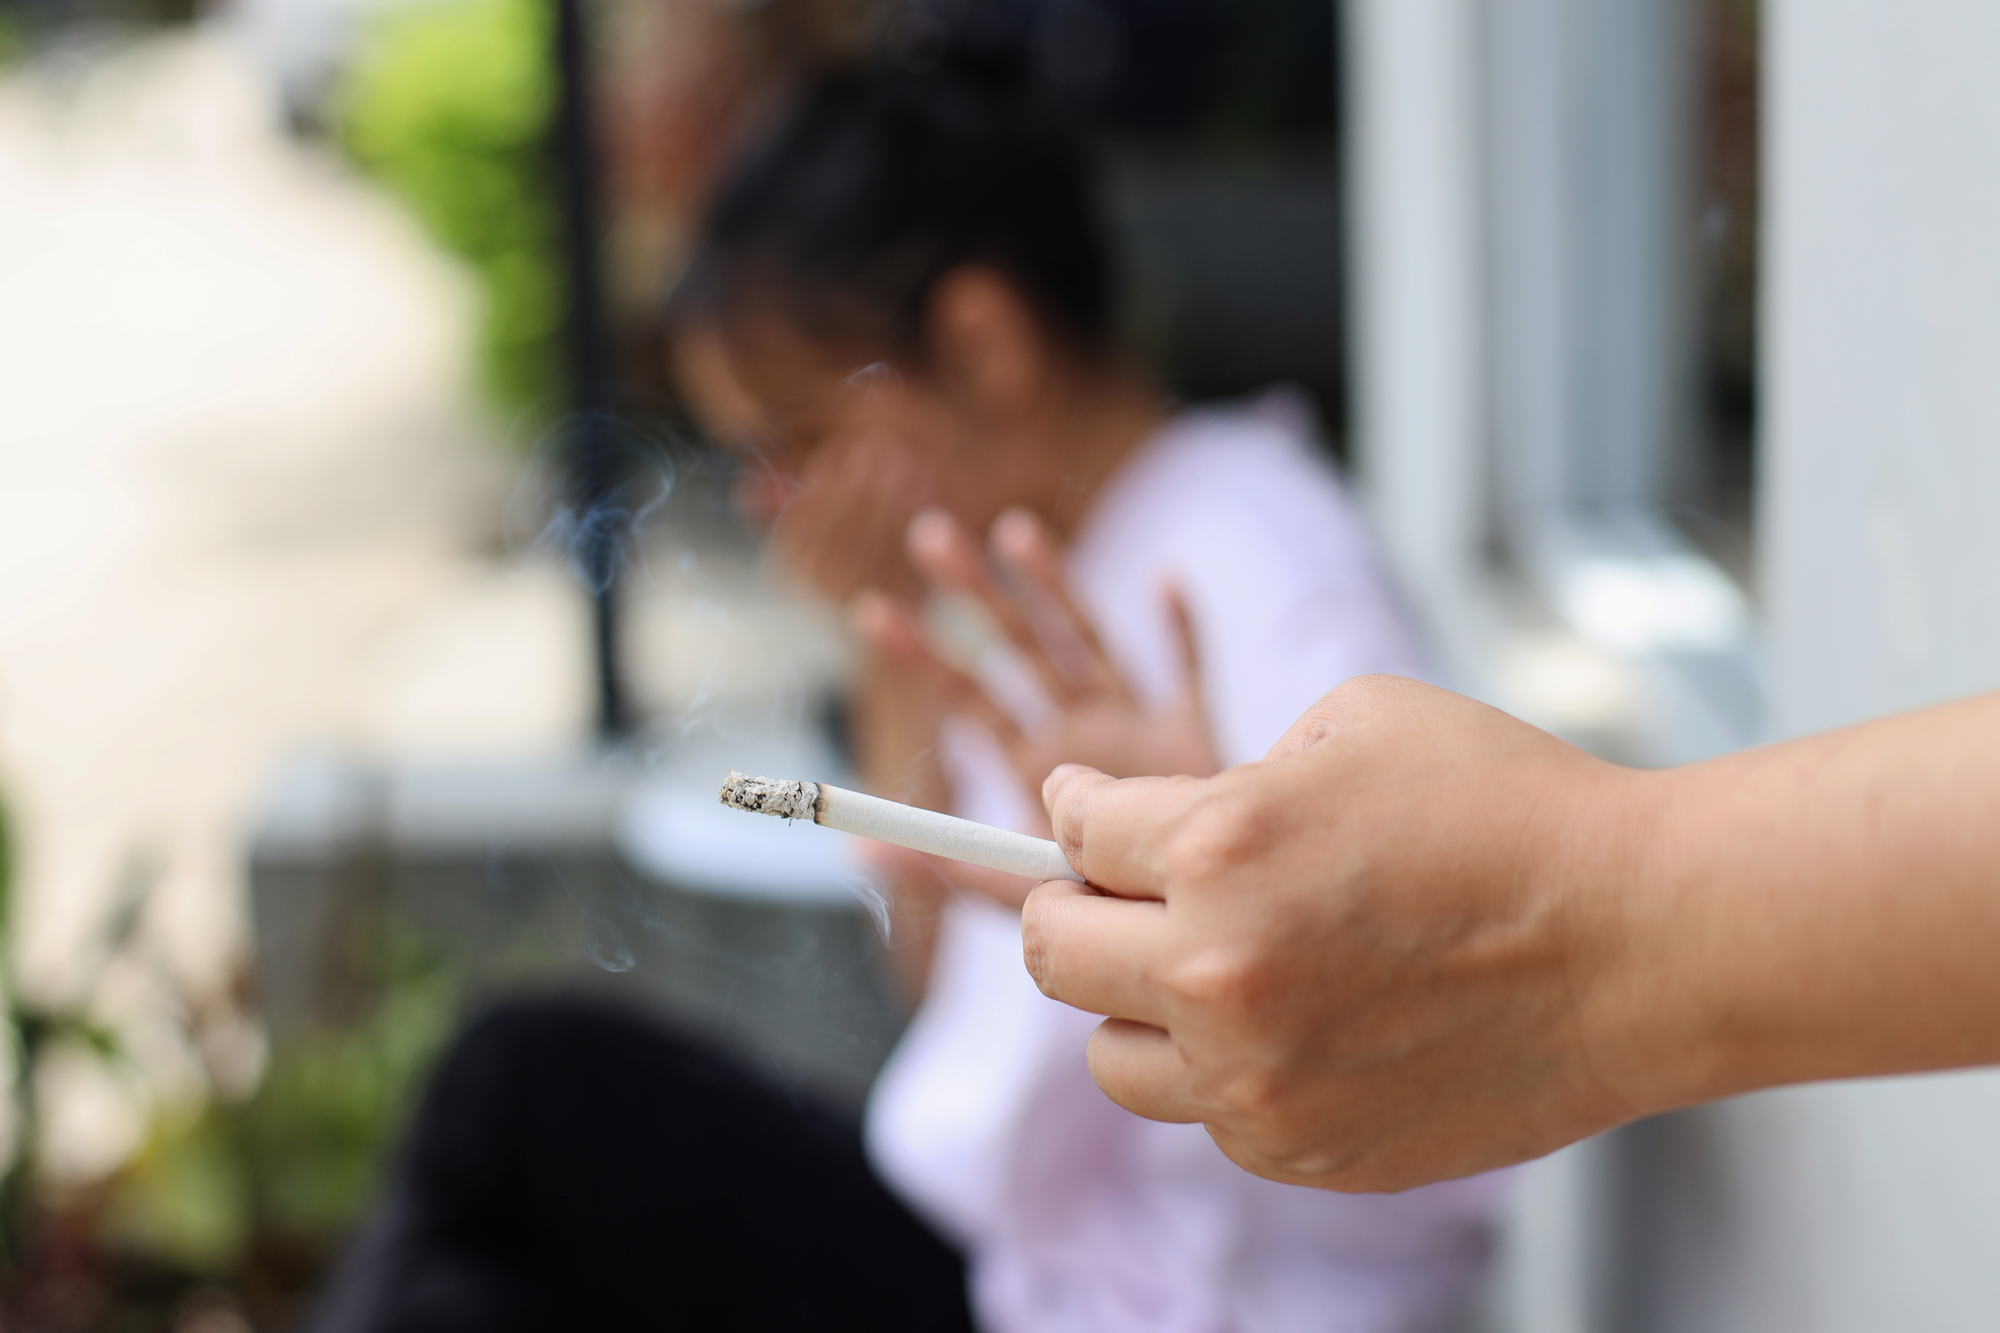 A person refusing to smoke a cigarette